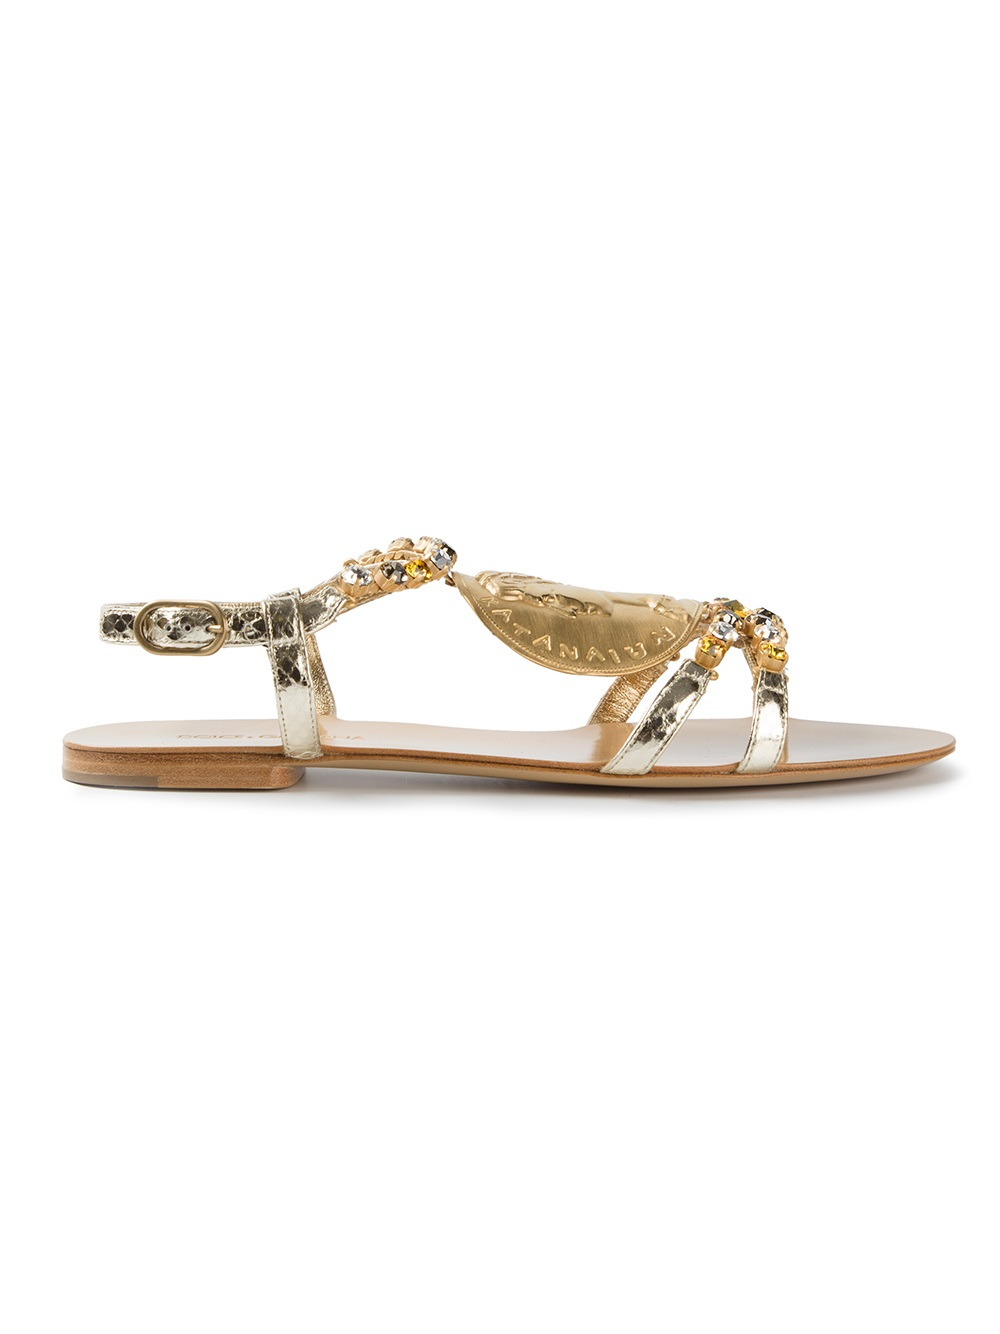 dolce-gabbana-gold-embellished-flat-sandals-product-1-19685129-3 ...